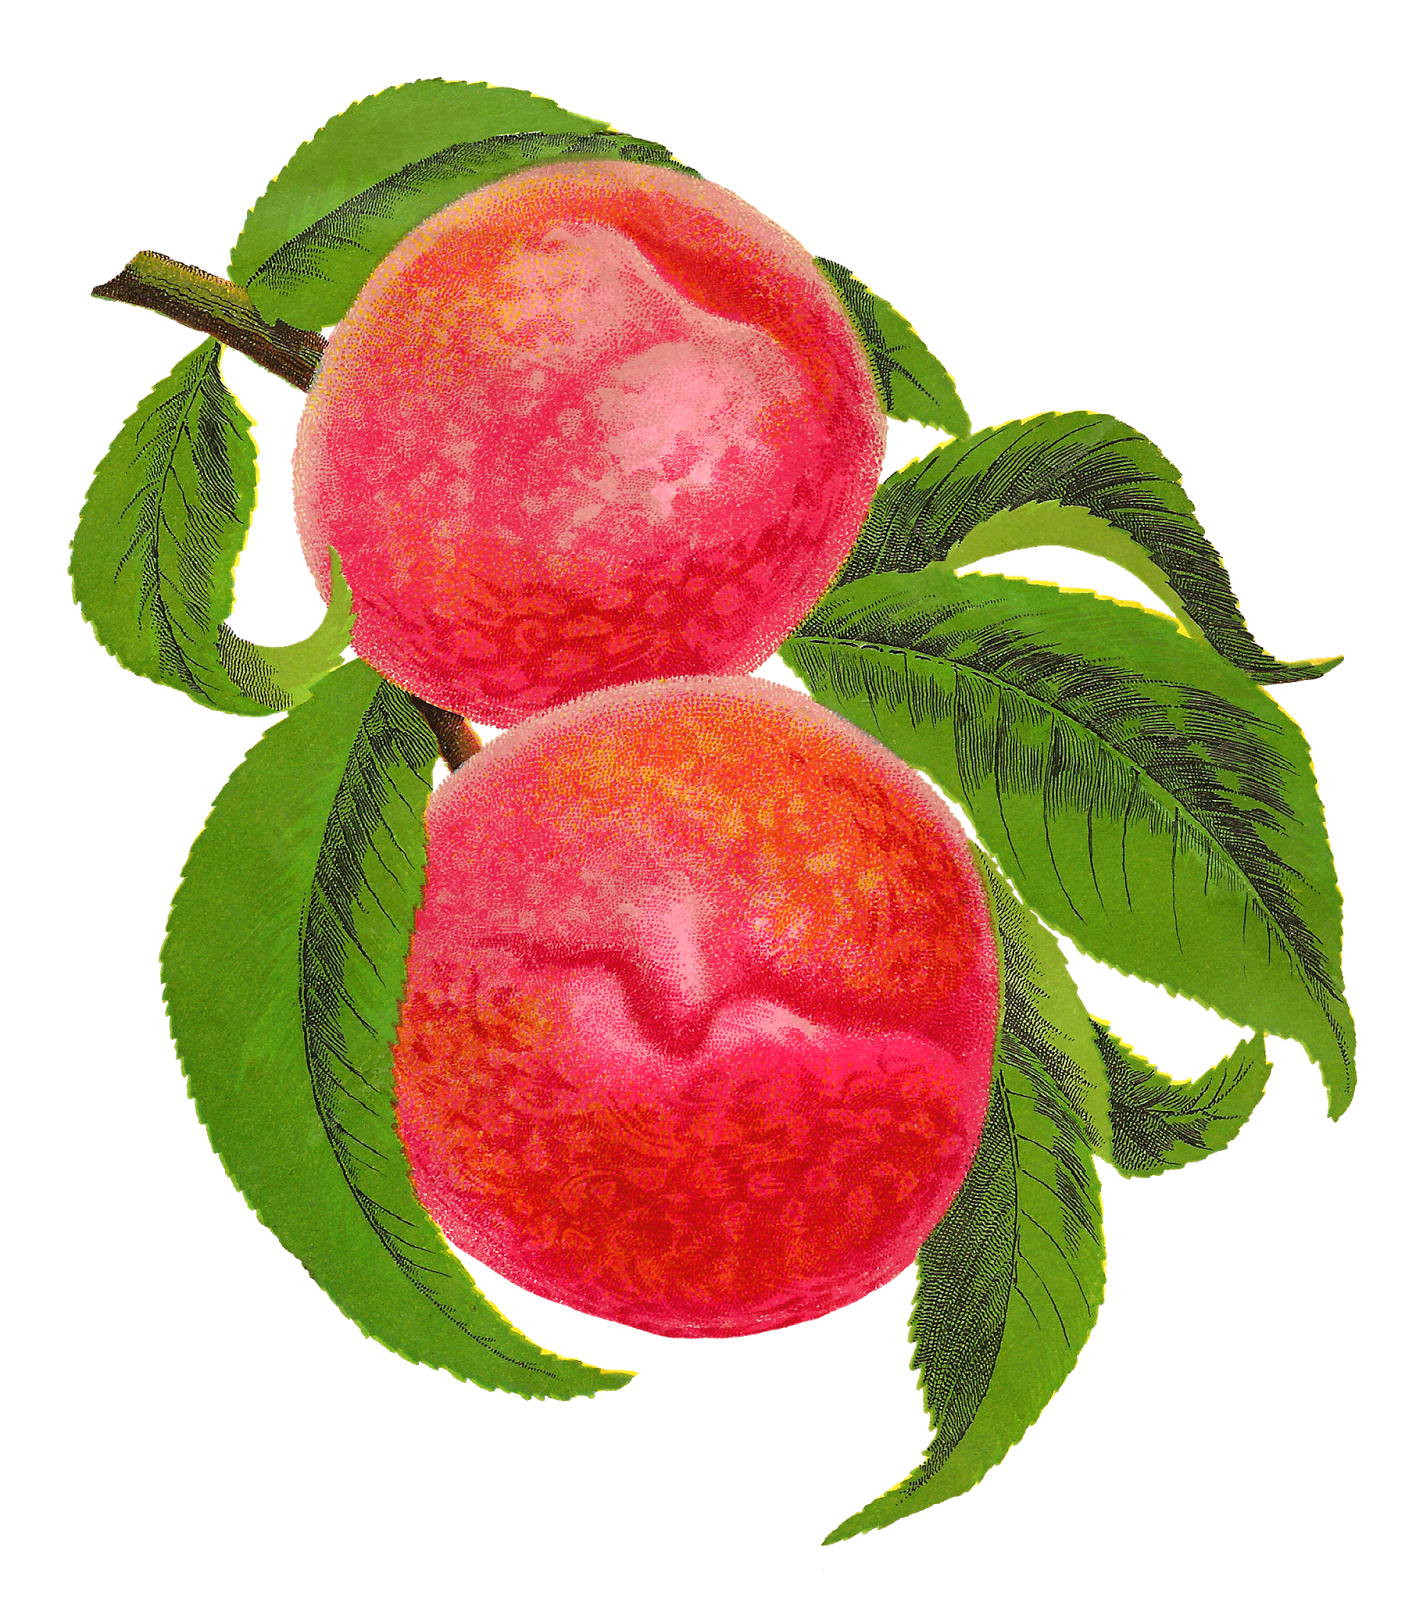 Antique images stock illustration. Peaches clipart ripe fruit